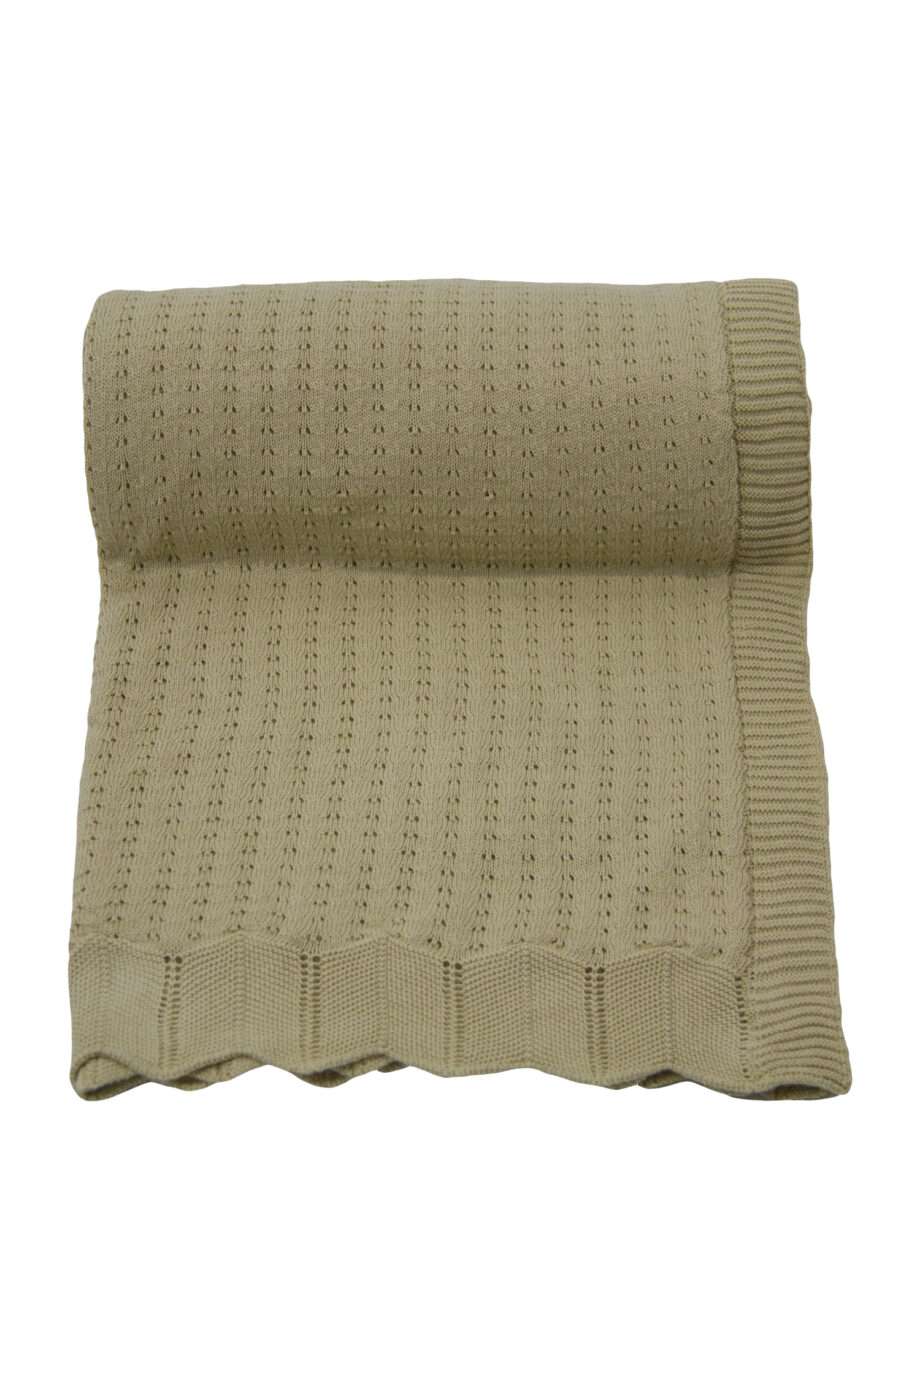 nouveau ochre knitted cotton plaid medium